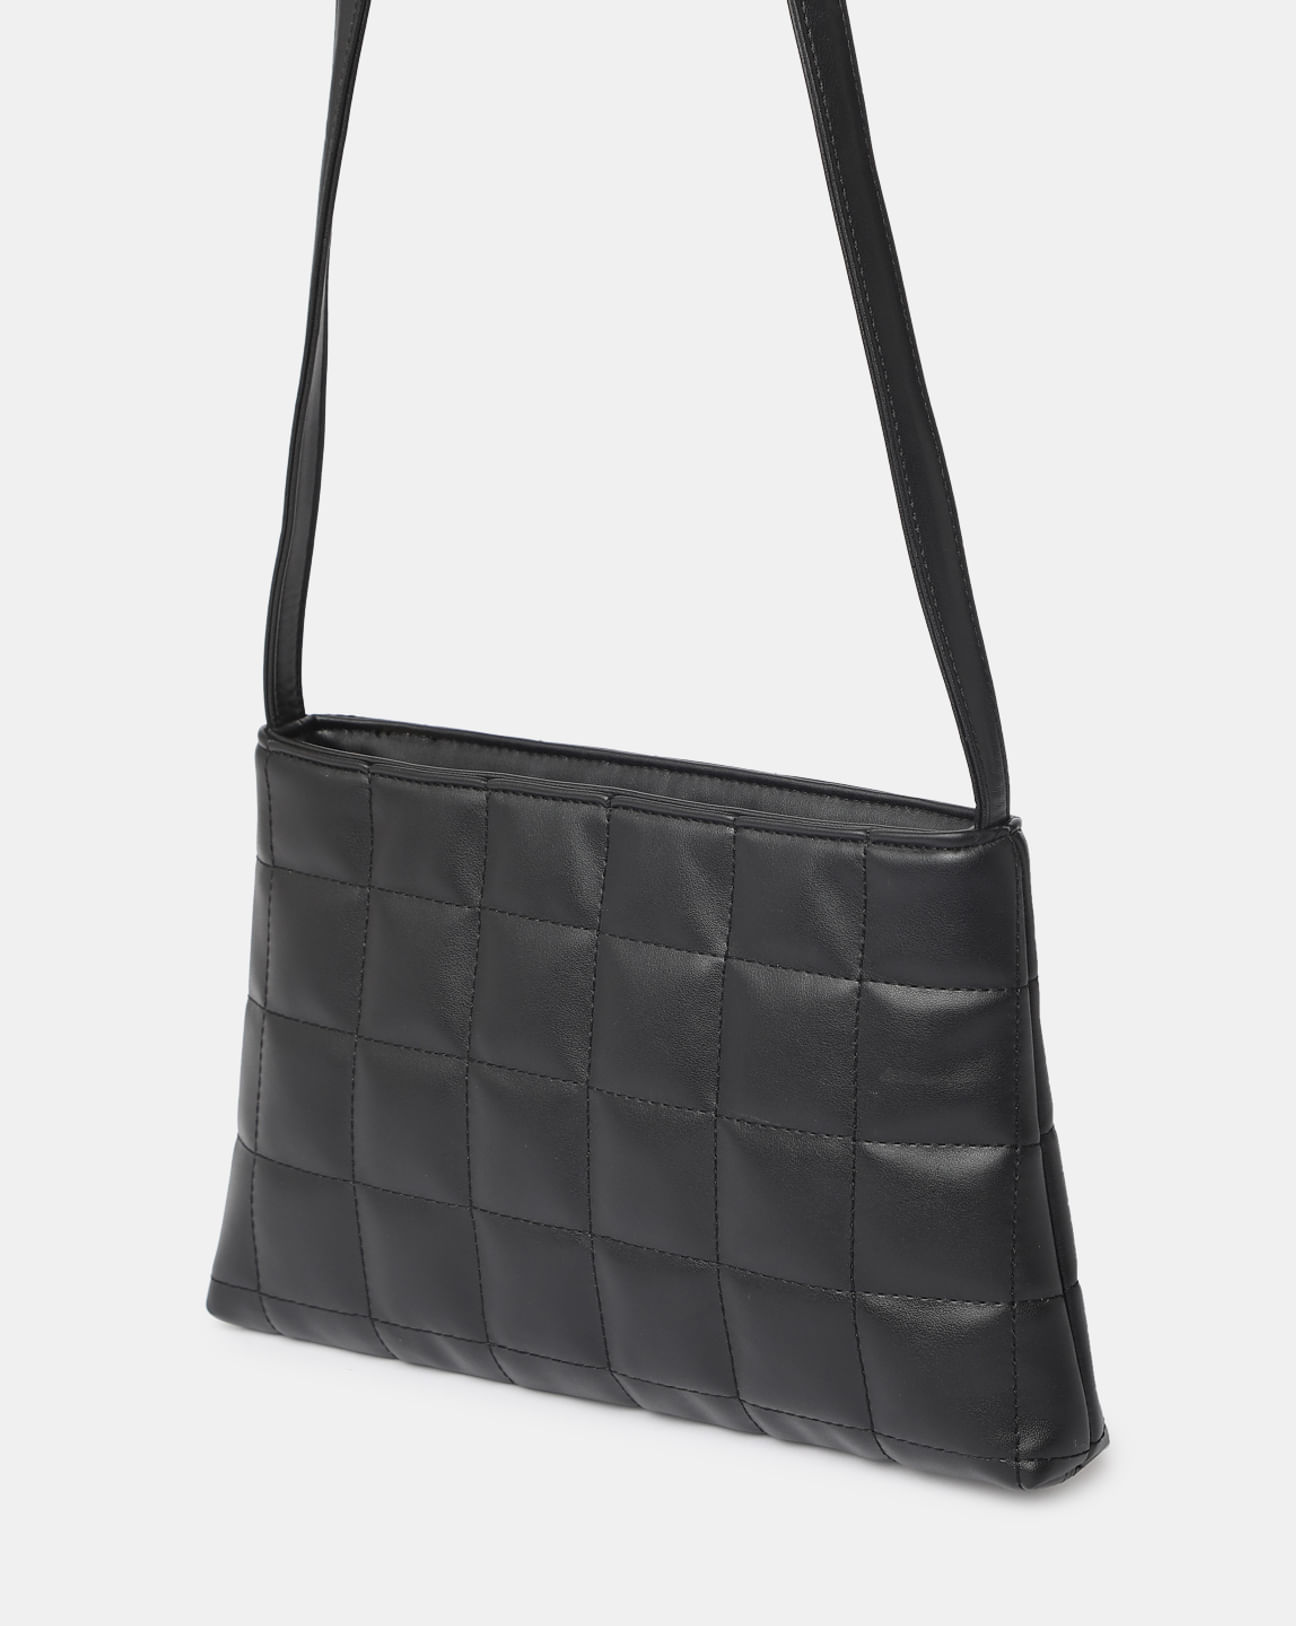 VERO MODA Black Structured Sling Bag